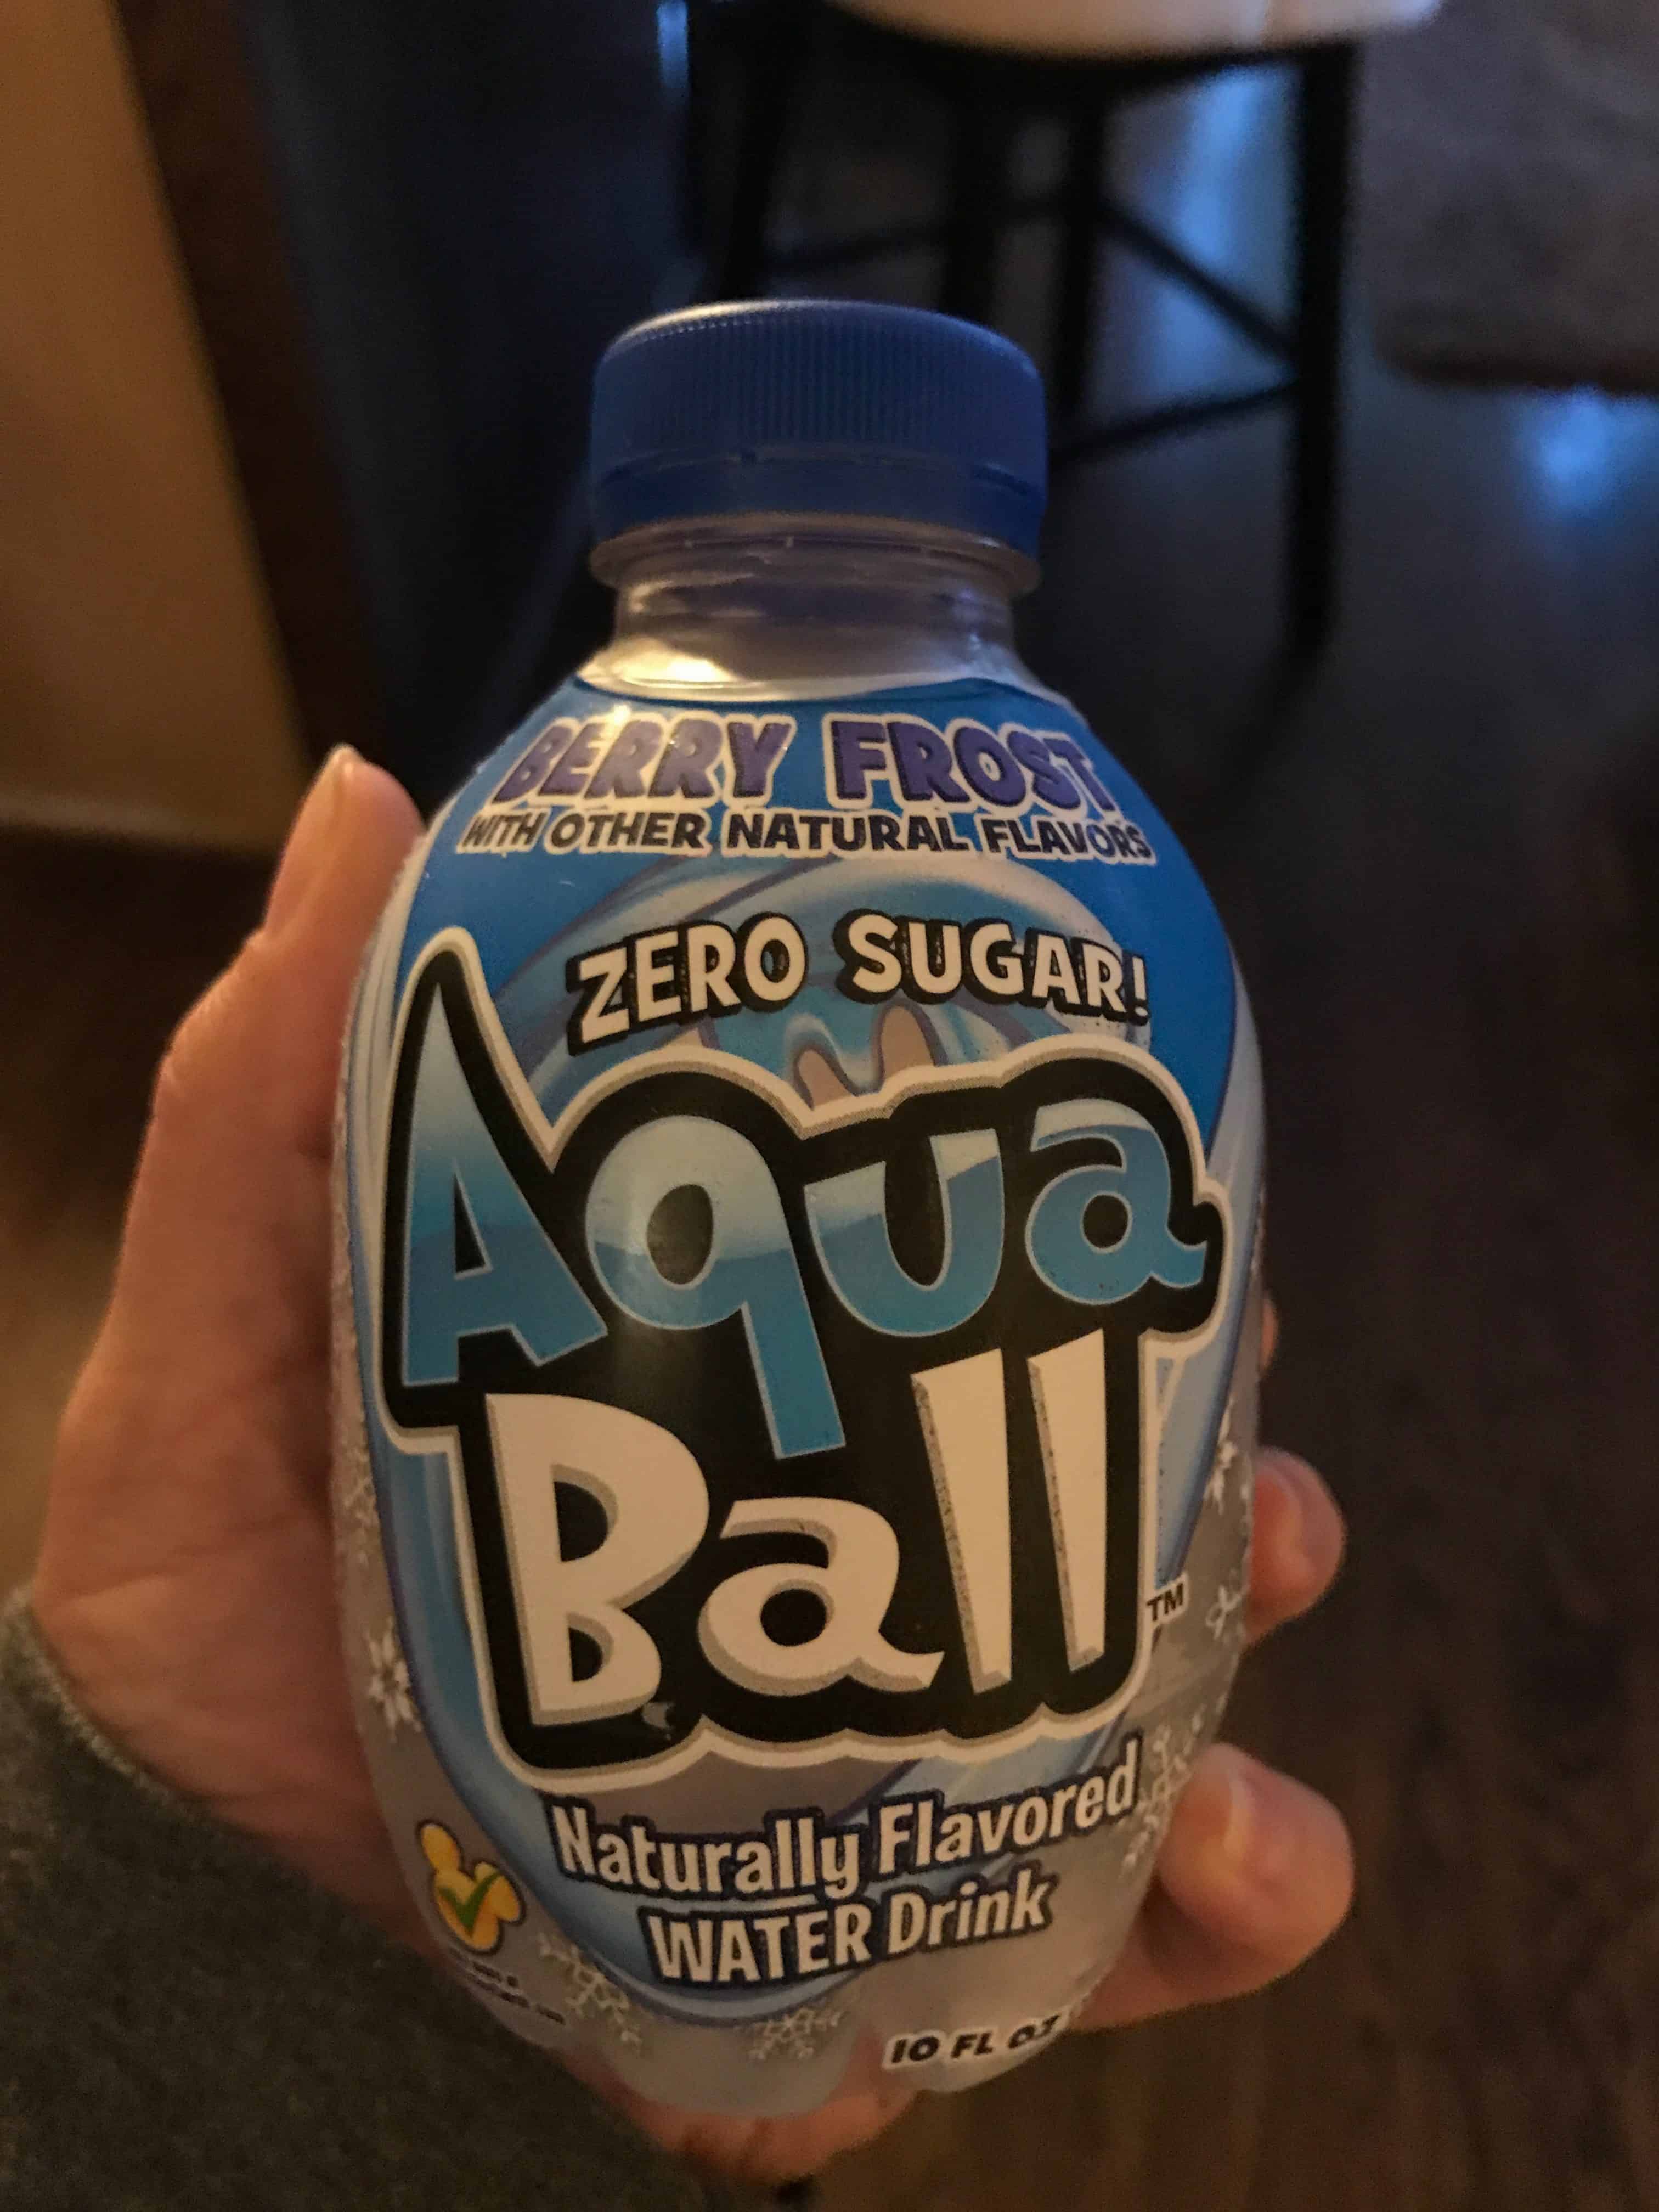 aquaball drink